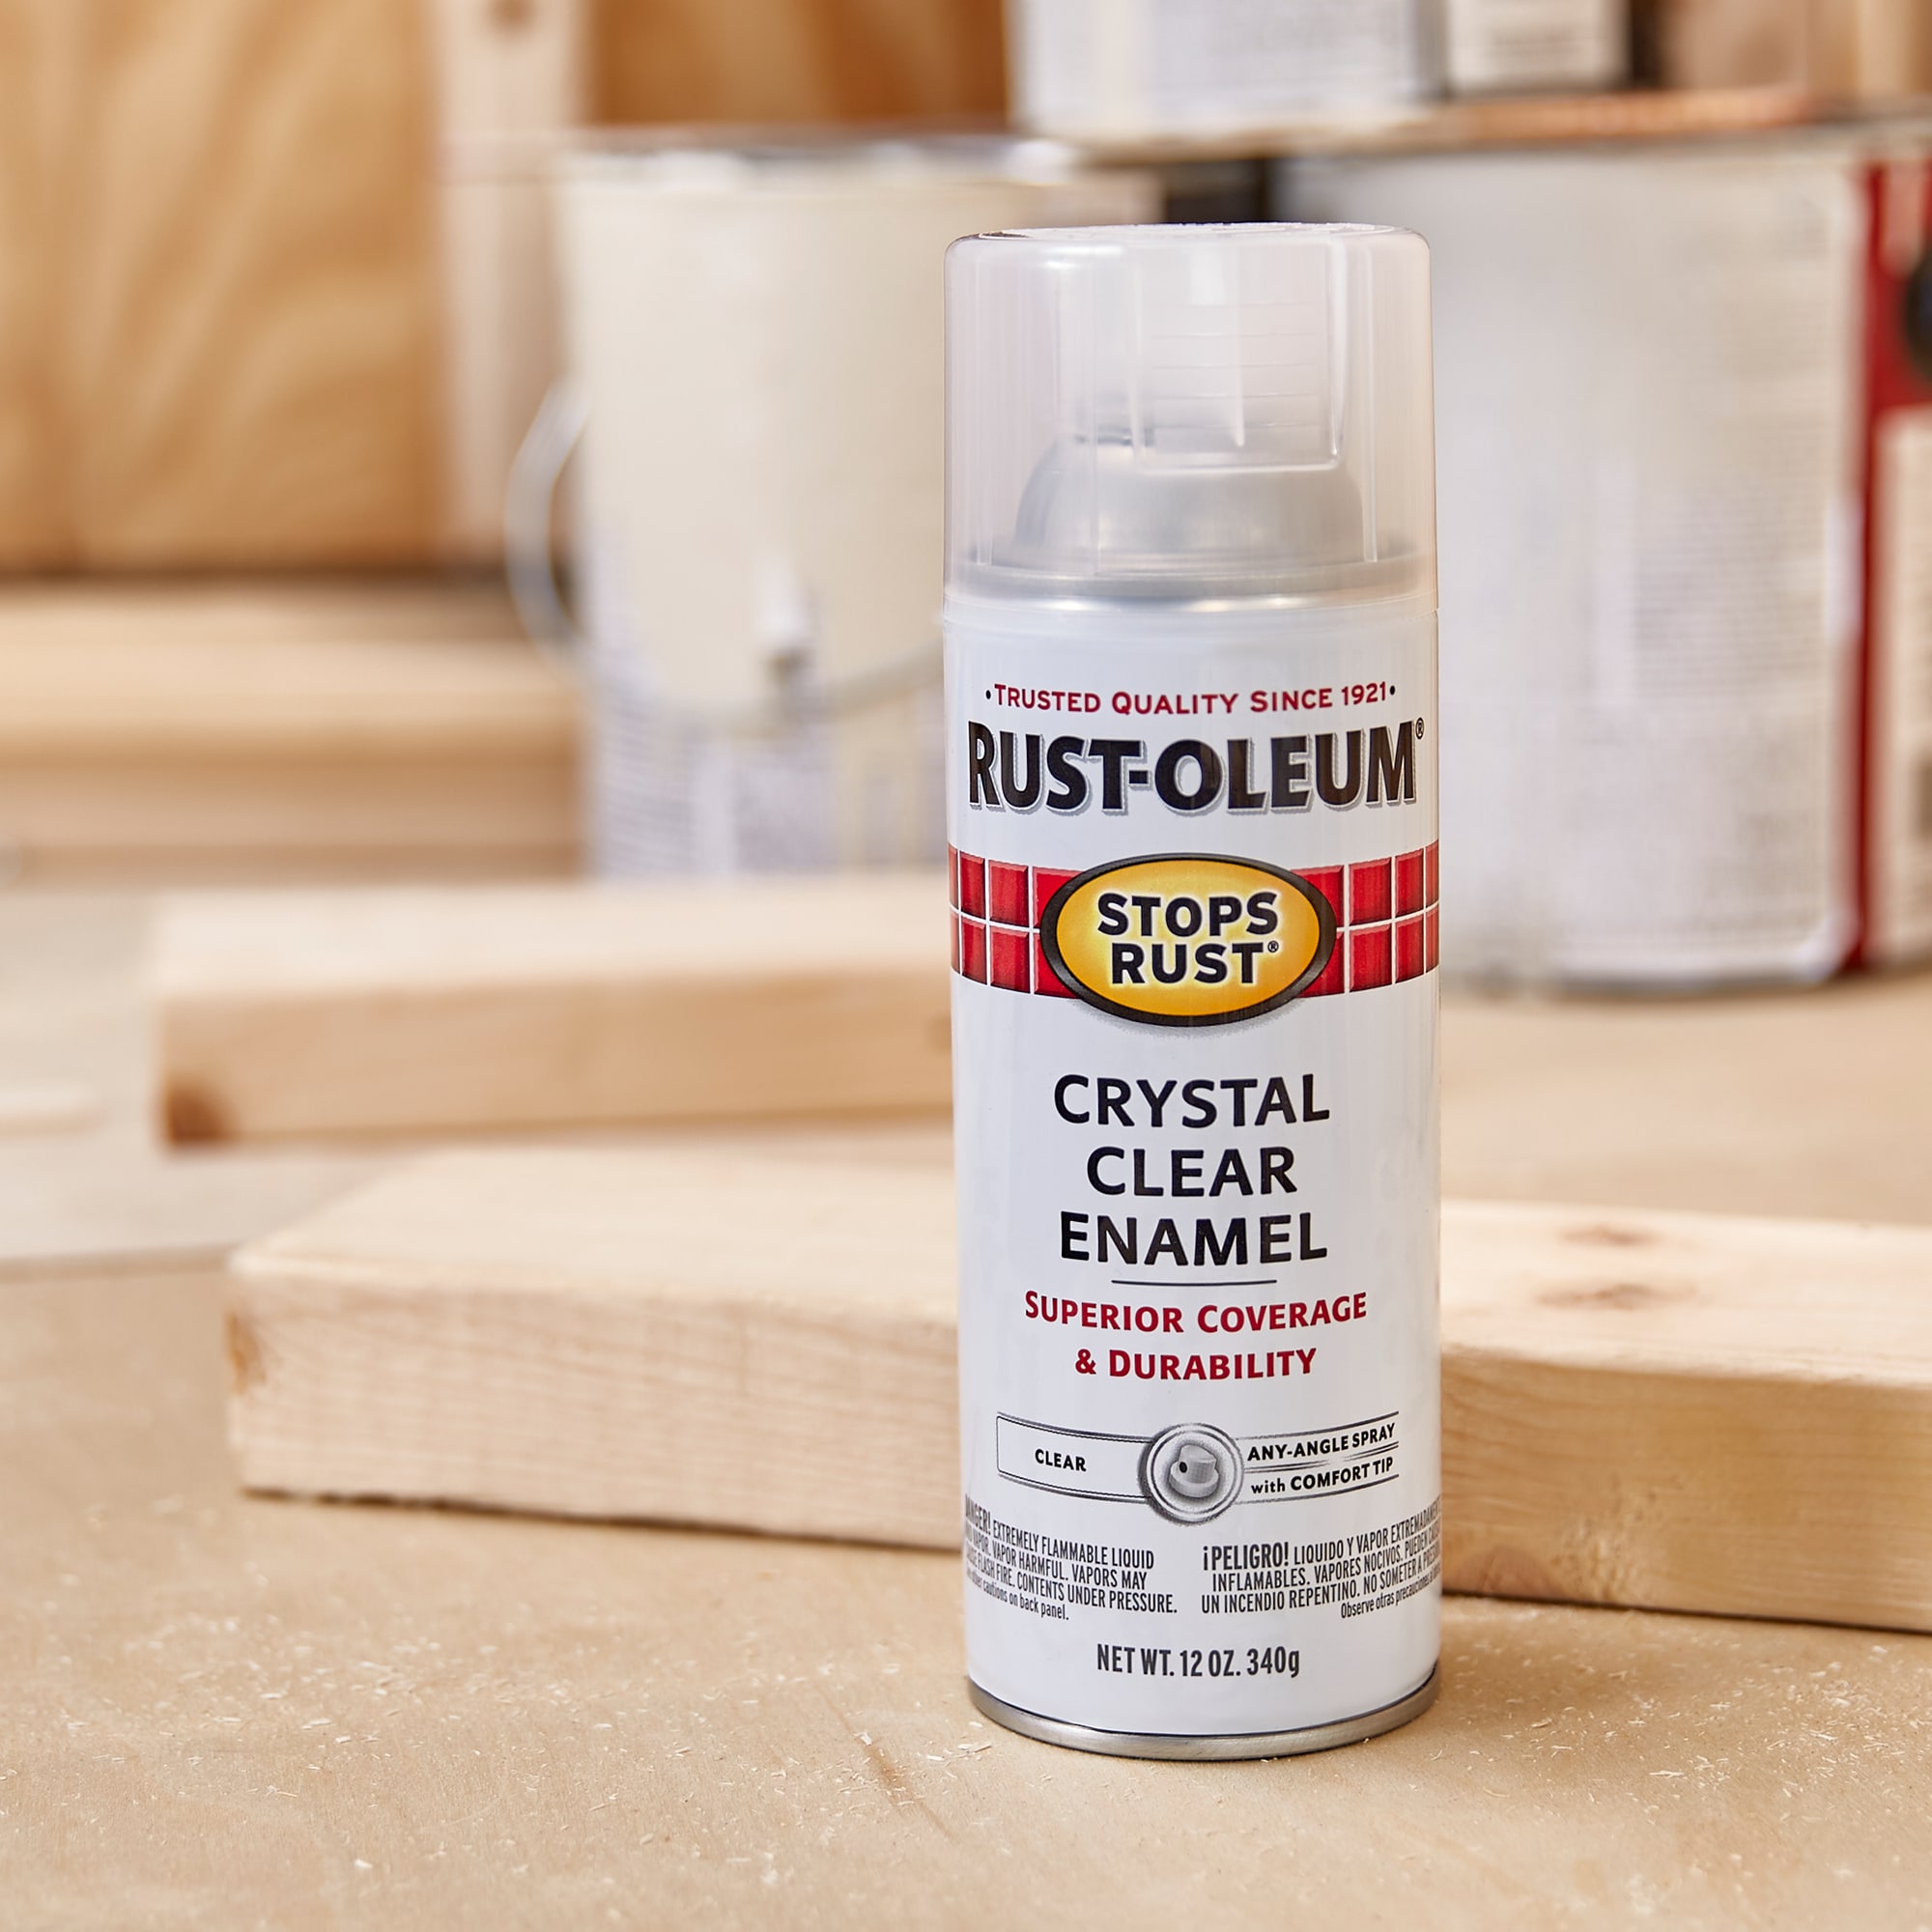 Rust-Oleum Stops Rust 12 Oz. Matte Clear Enamel Spray Paint, Clear